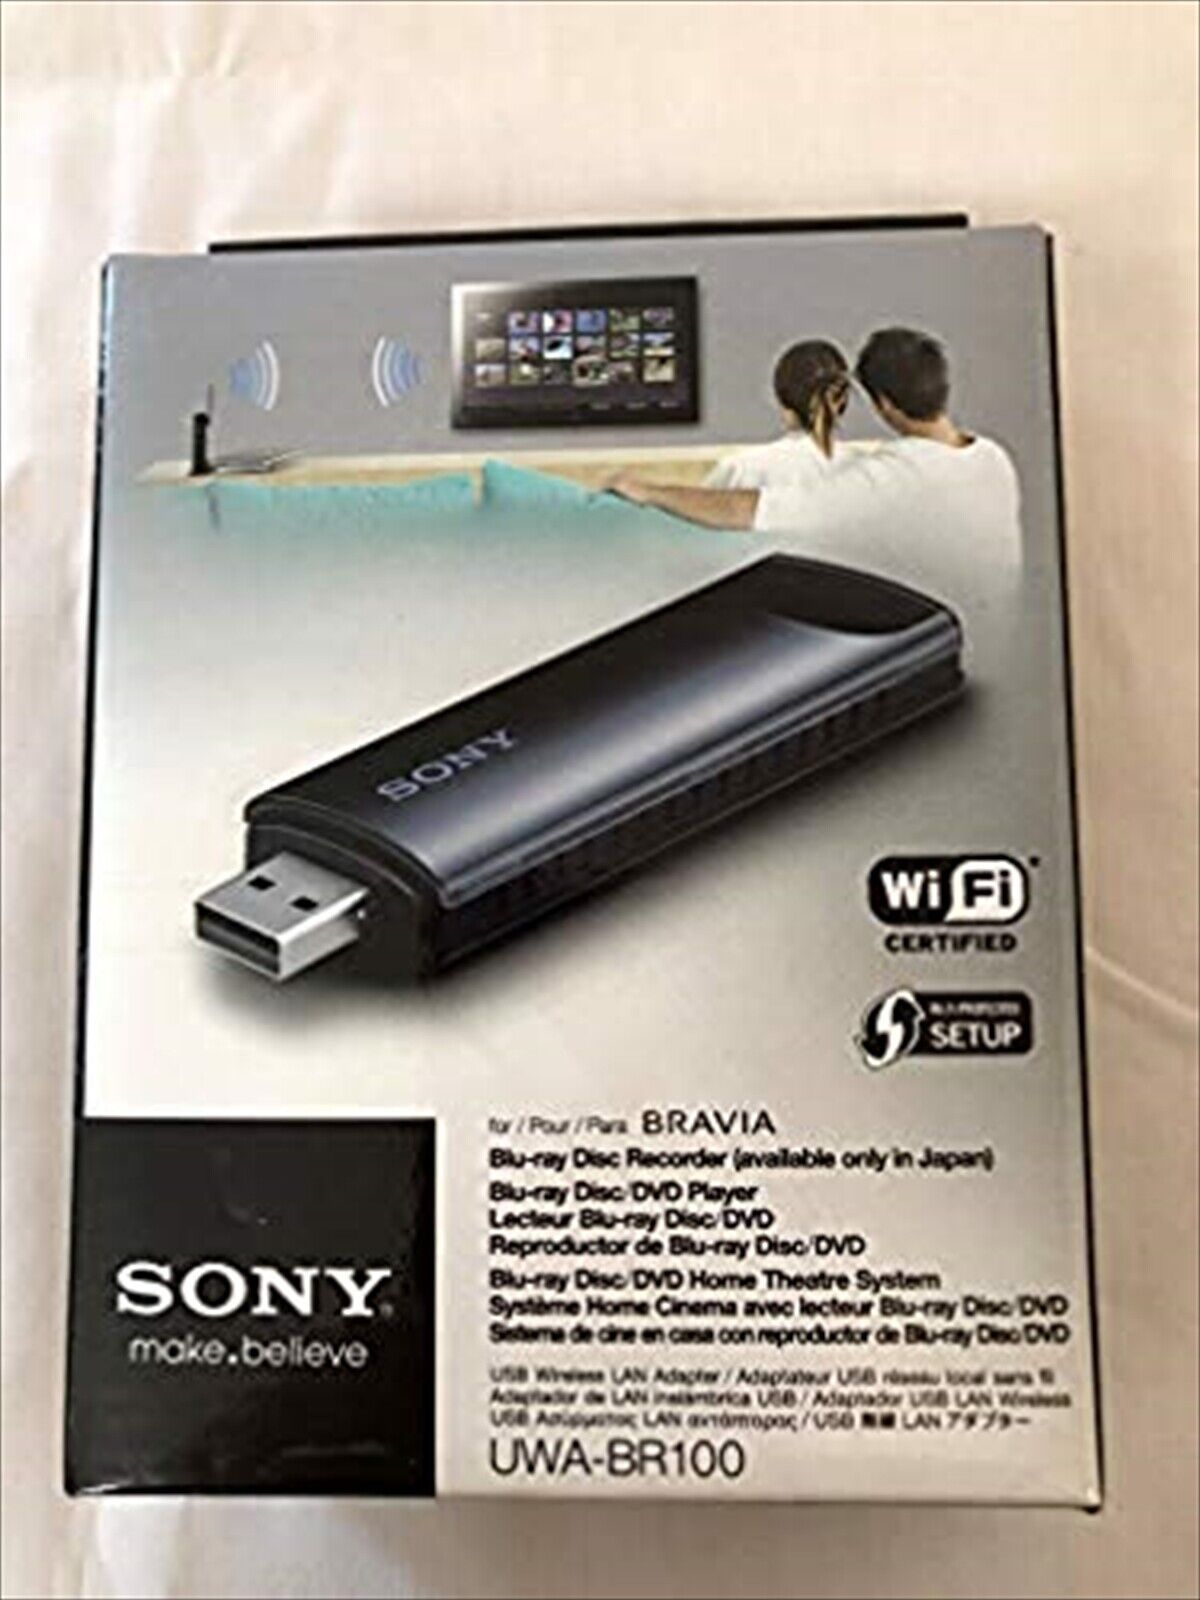 SONY BRAVIA USB wireless LAN adapter UWA-BR100 Expedited Shipping used